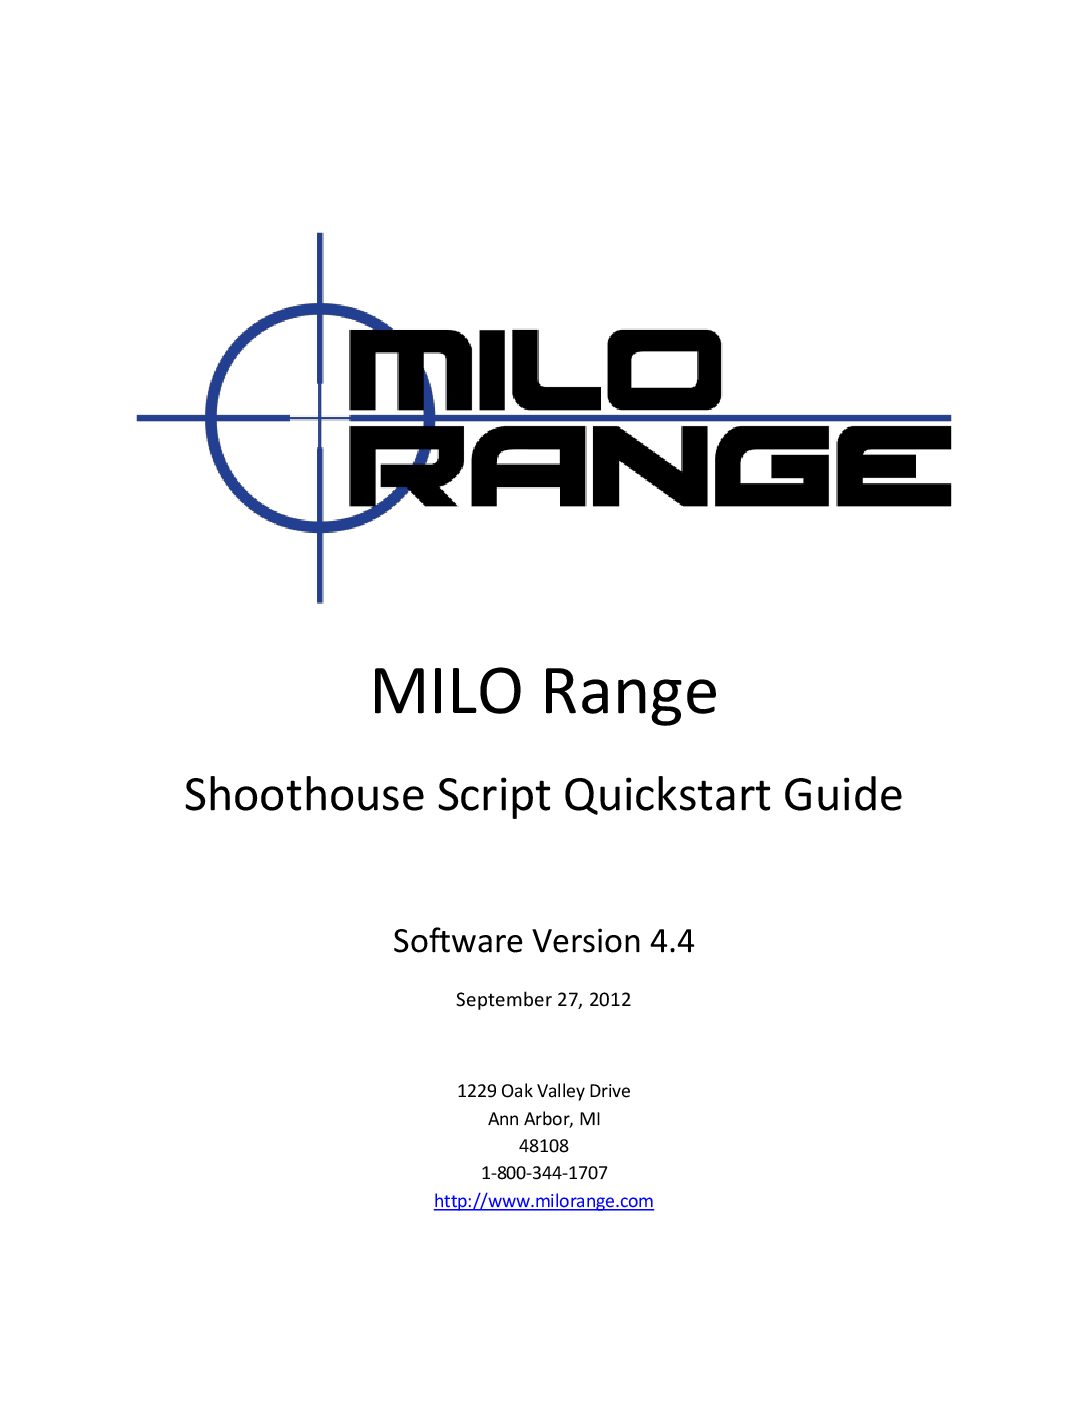 MILO Range Shoothouse Script Tutorial & Tips